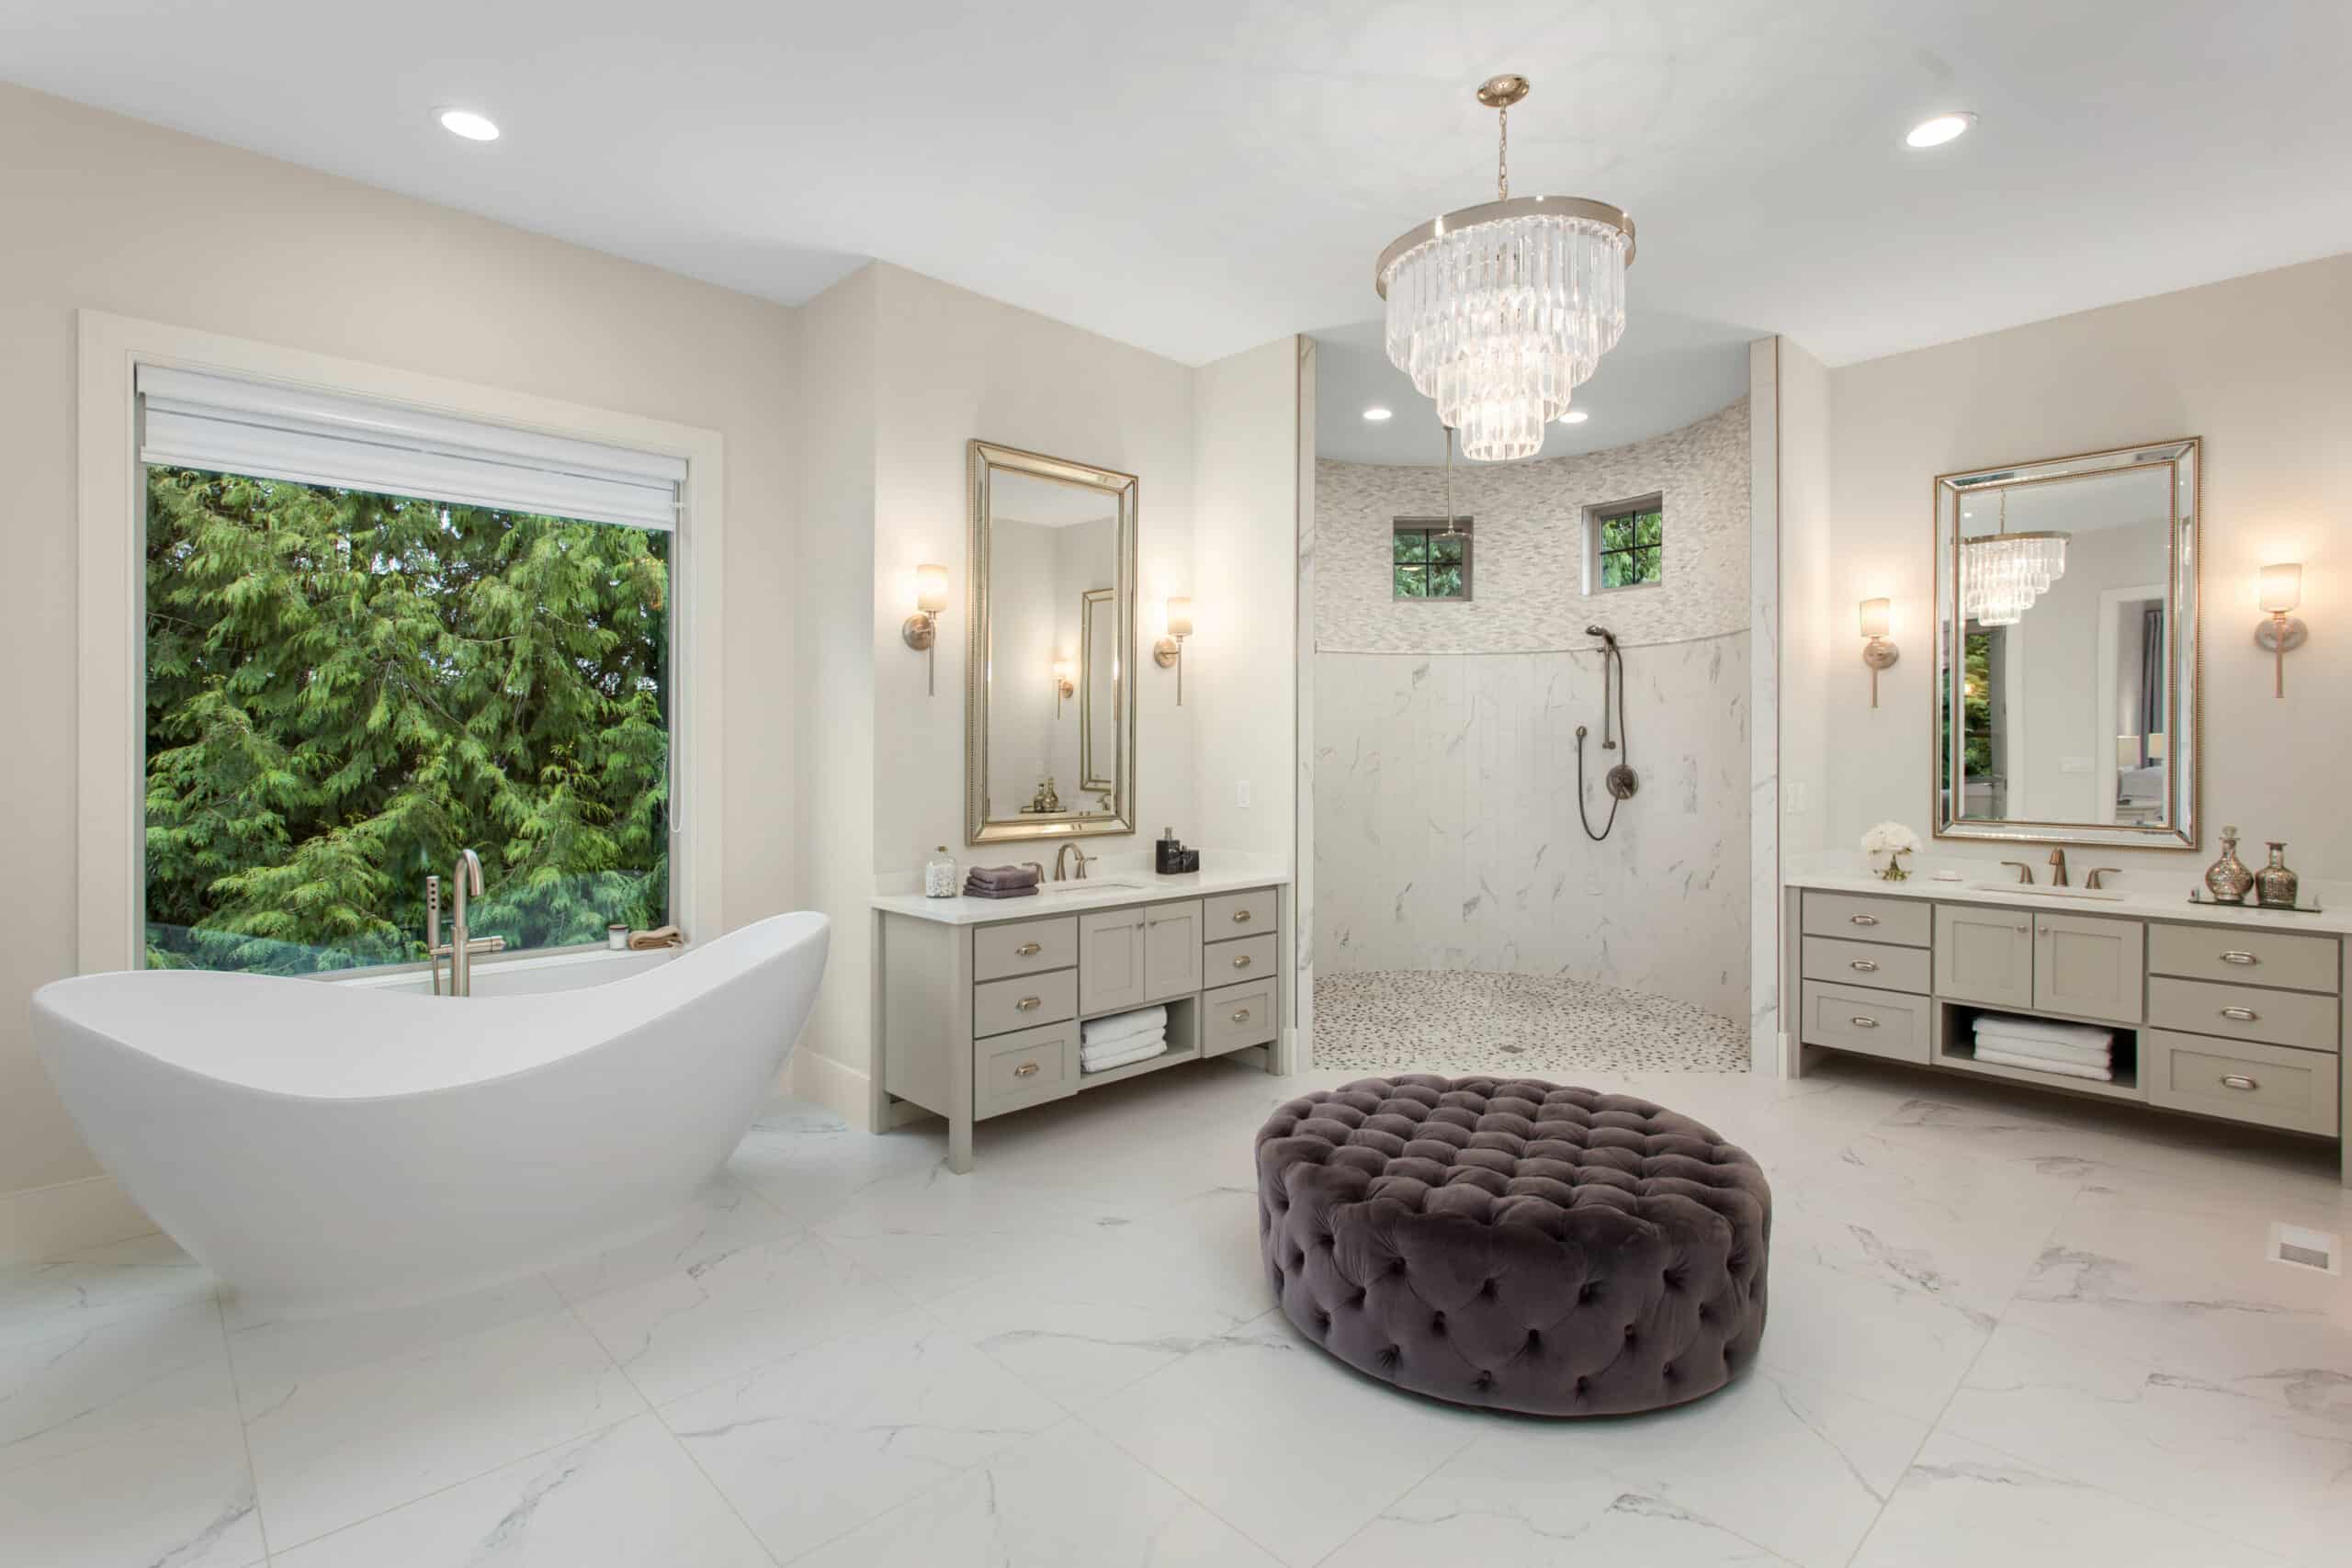 Elegant master bathroom in new luxury home, with two vanities, w